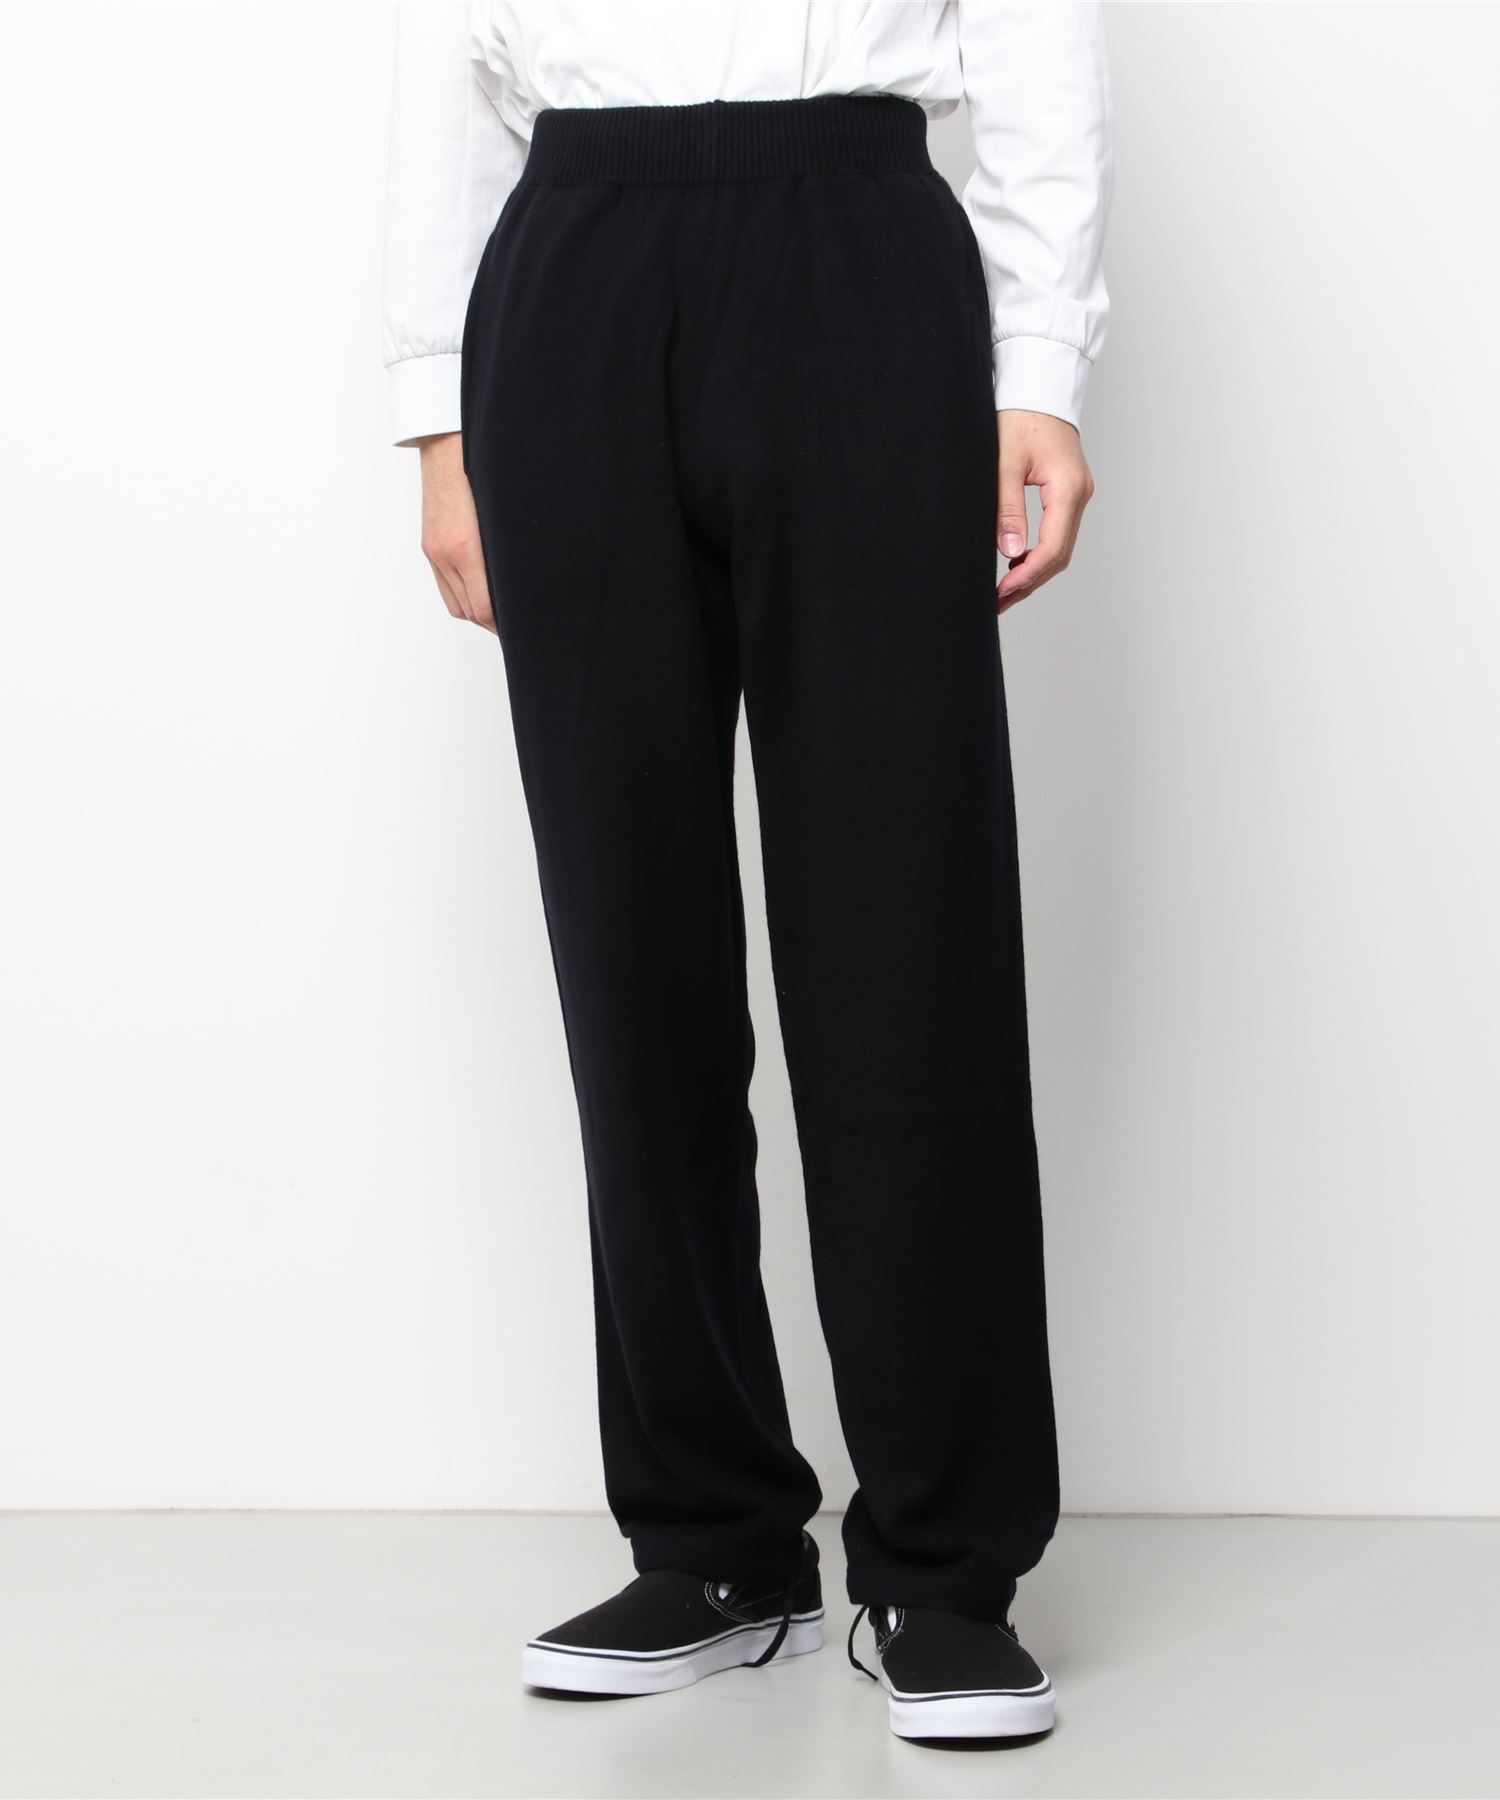 STAMMBAUMSTAMMBAUM : Knit 売れ筋 スーパーセール Black Pants